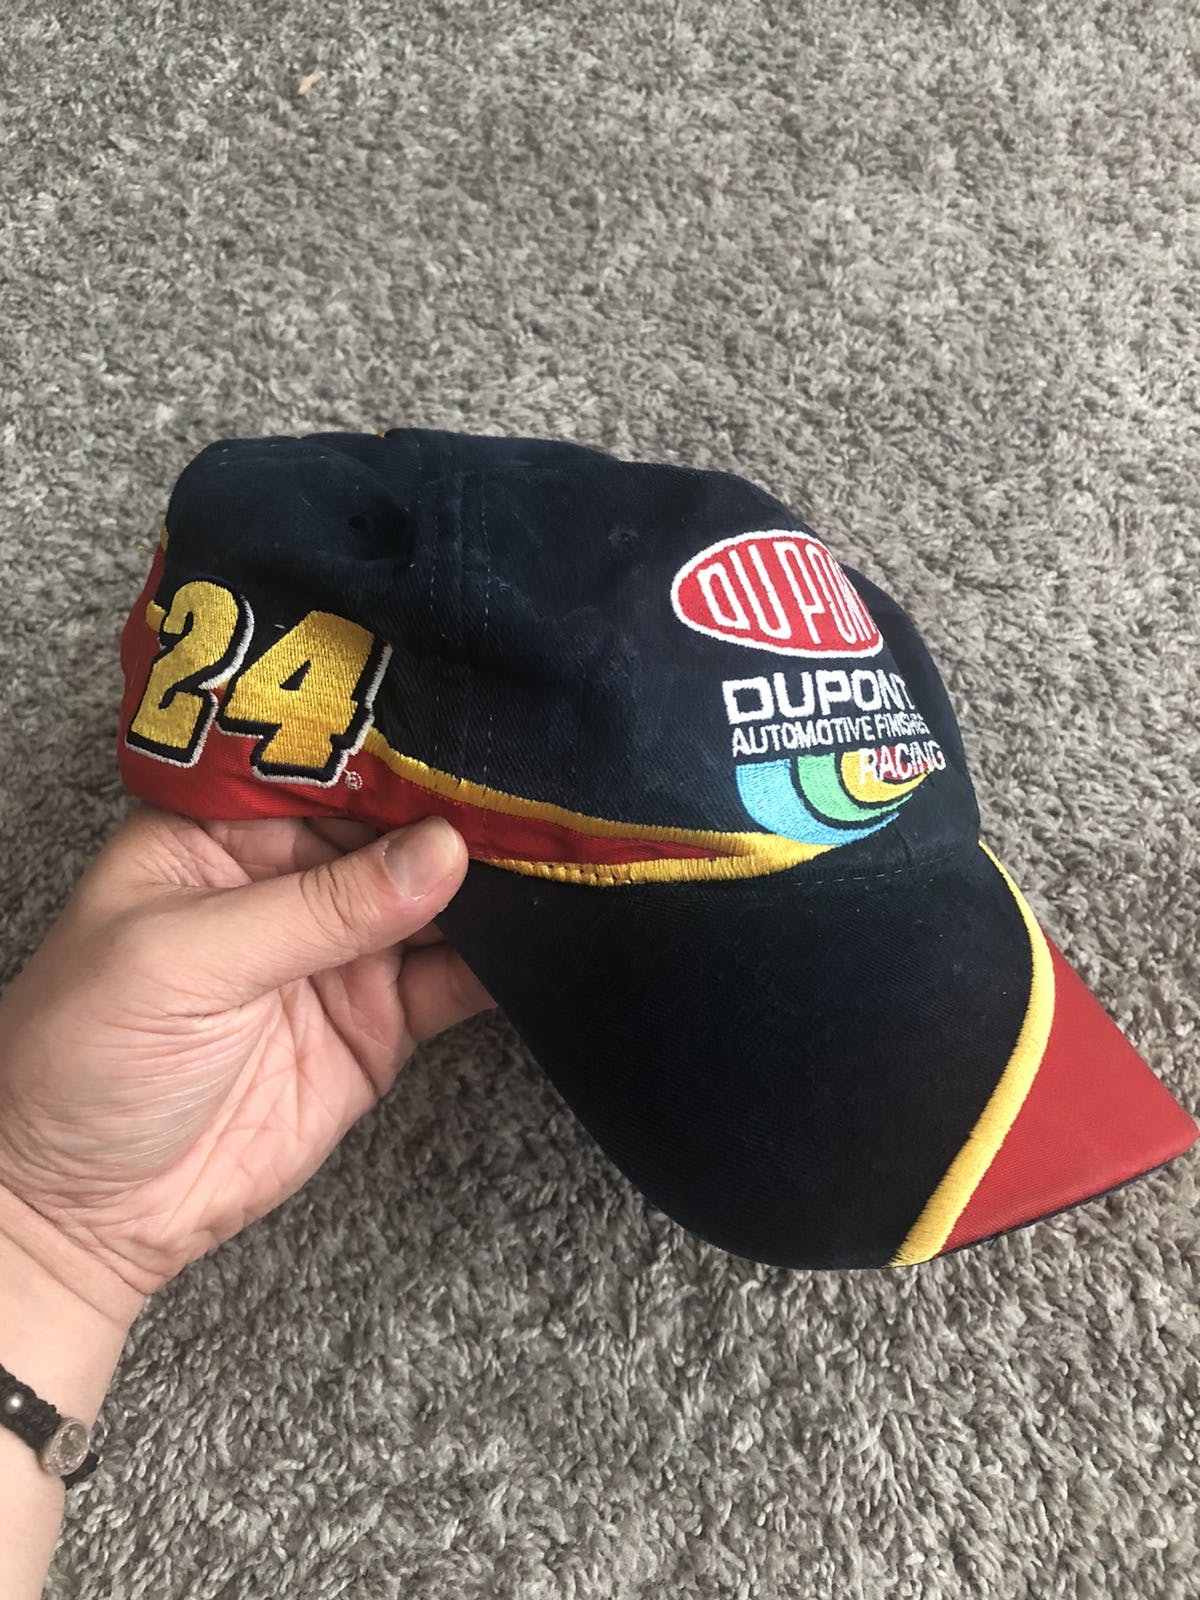 Vintage NASCAR Jeff Gordon Racing Hat - 2